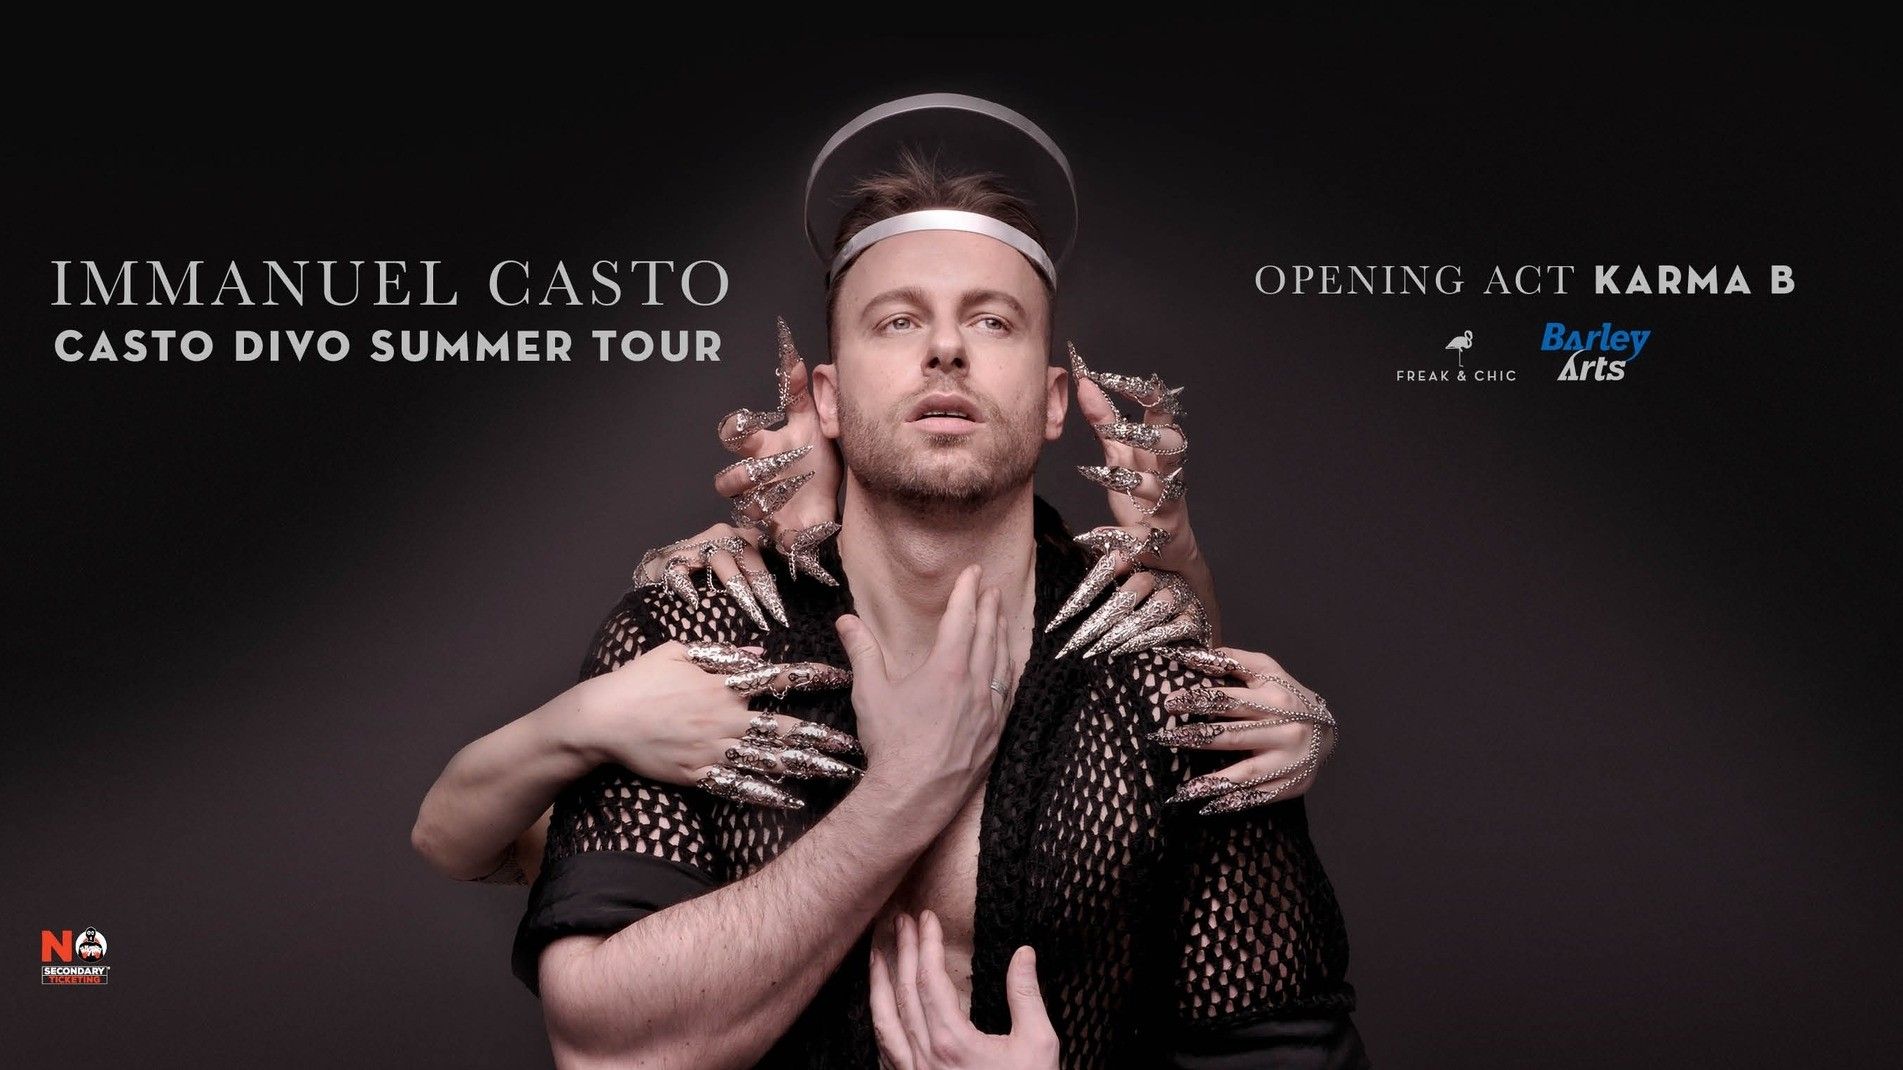 Immanuel Casto | Casto Divo Summer Tour